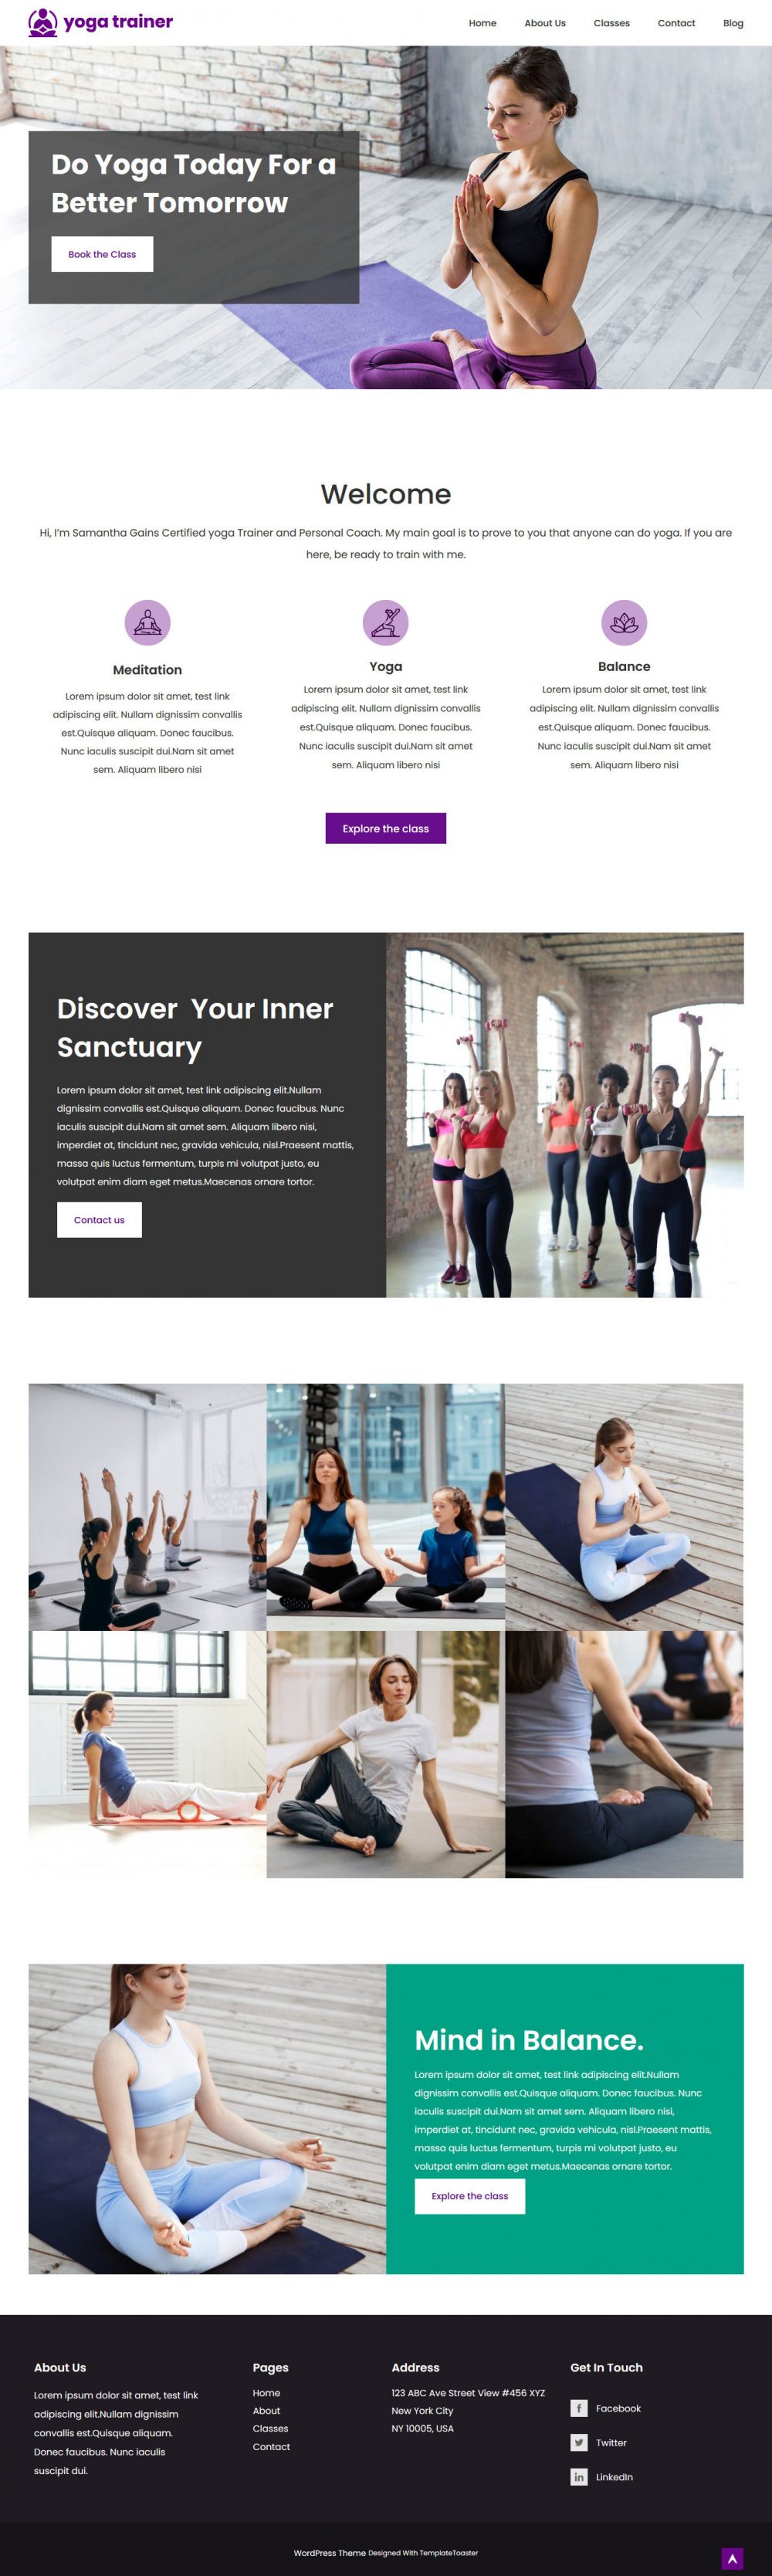 yoga trainer wordpress theme